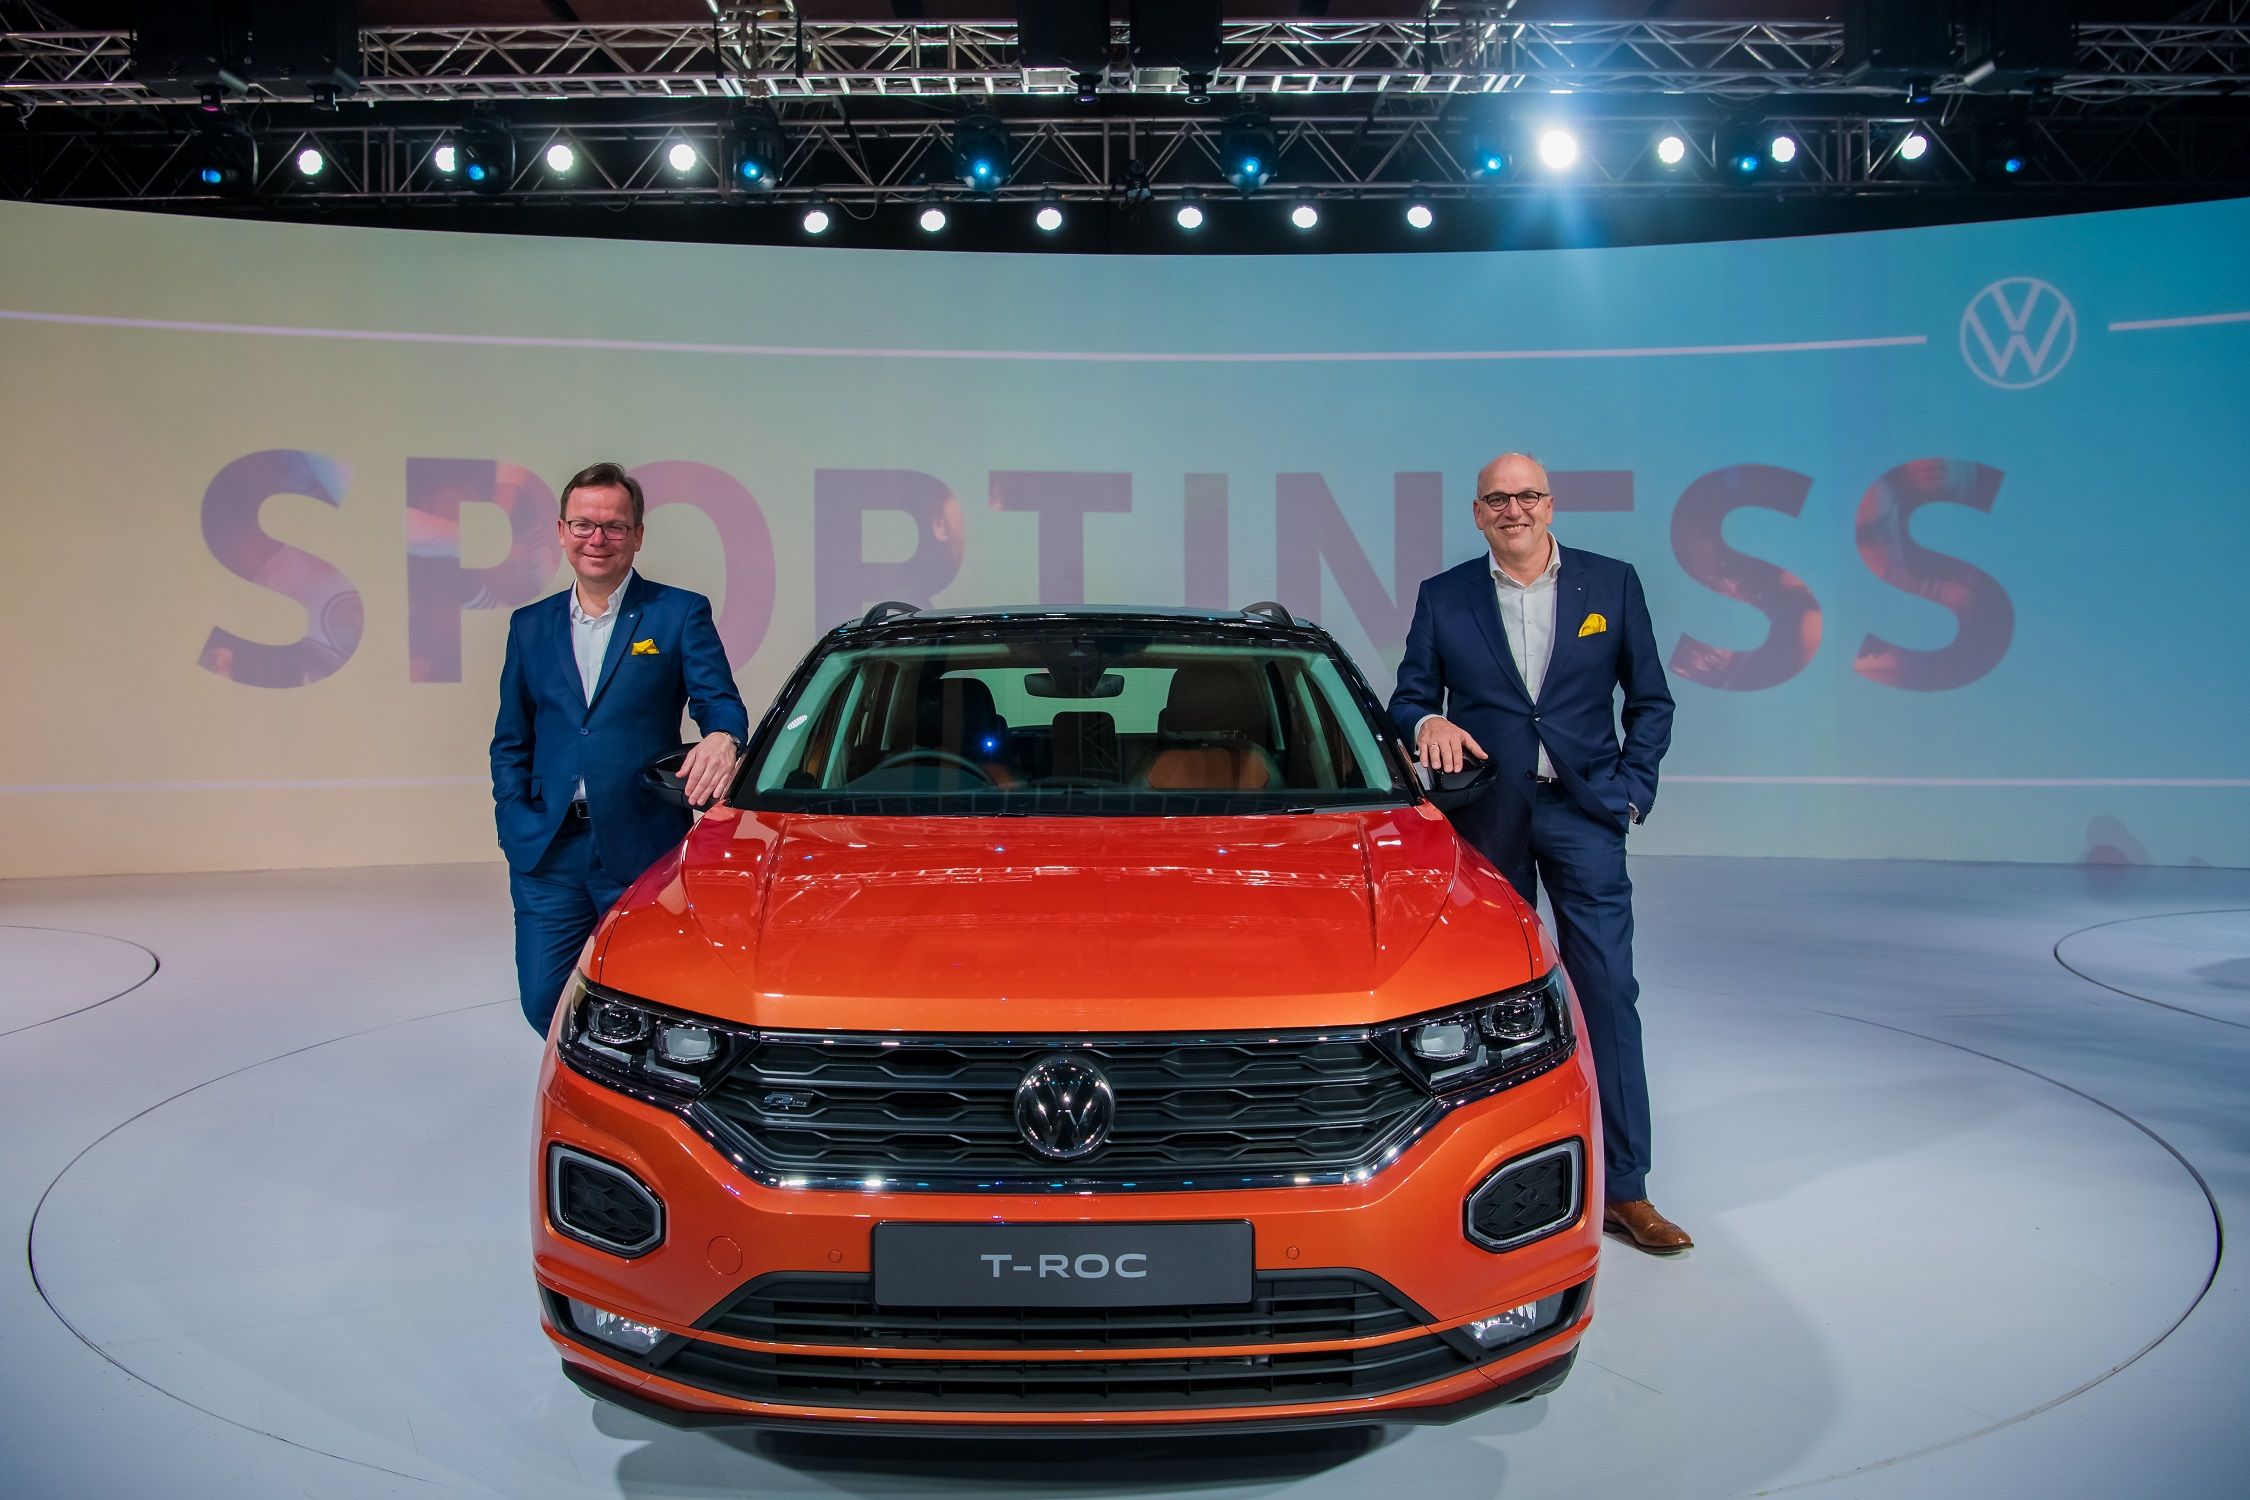 Volkswagen T-Roc unveiled ahead of Auto Expo 2020